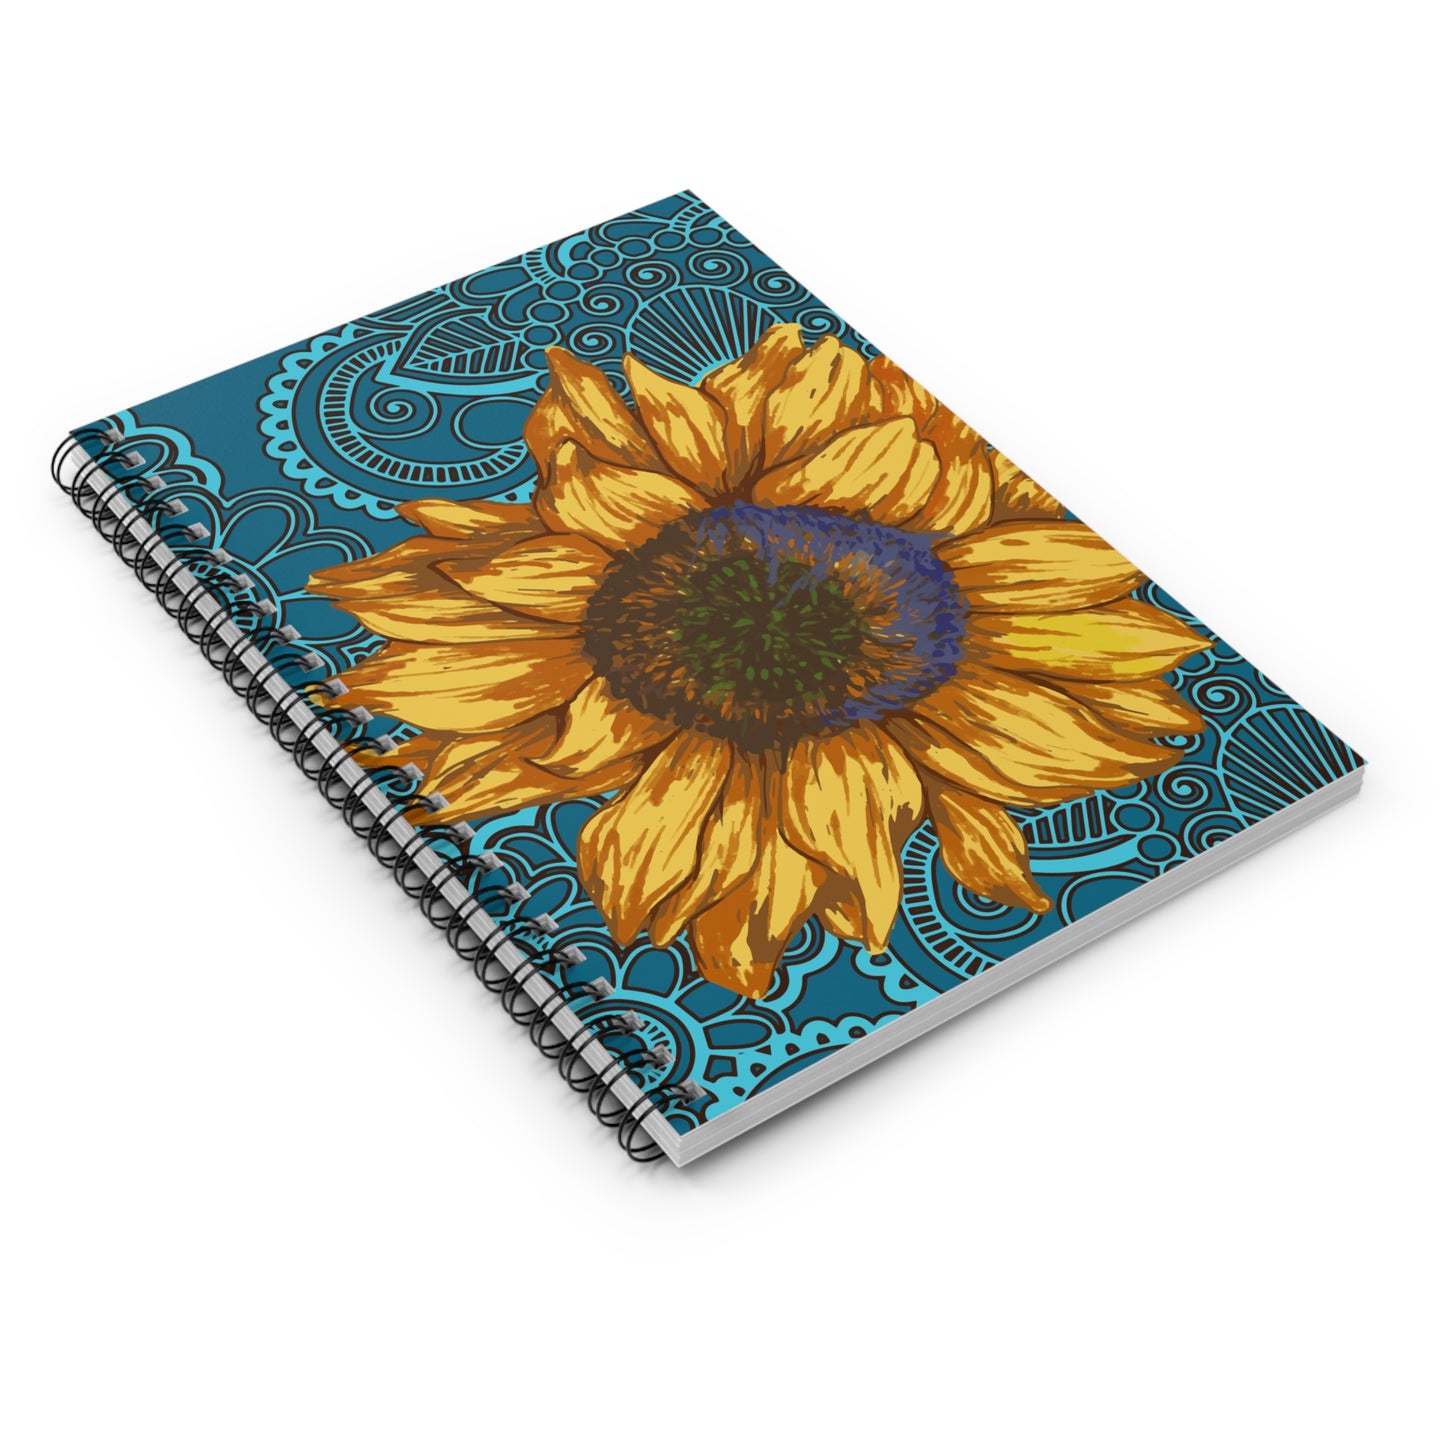 Sunflower - Spiral Notebook - Ruled Line